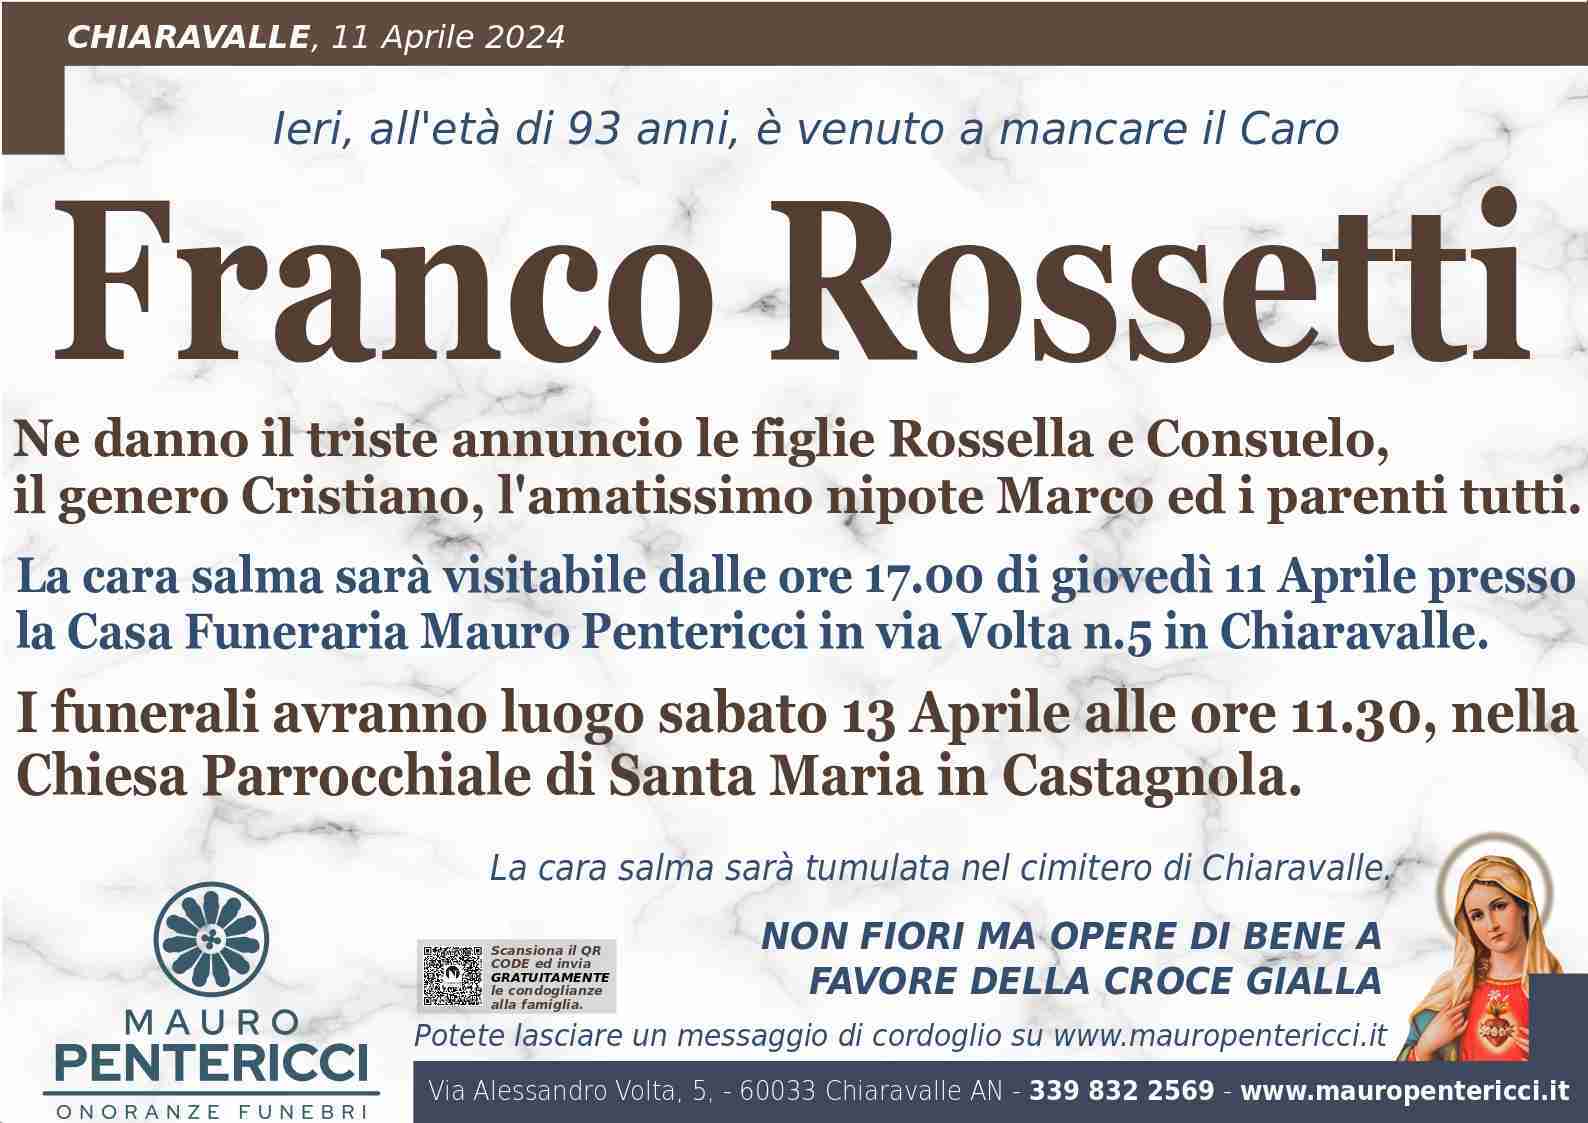 Franco Rossetti